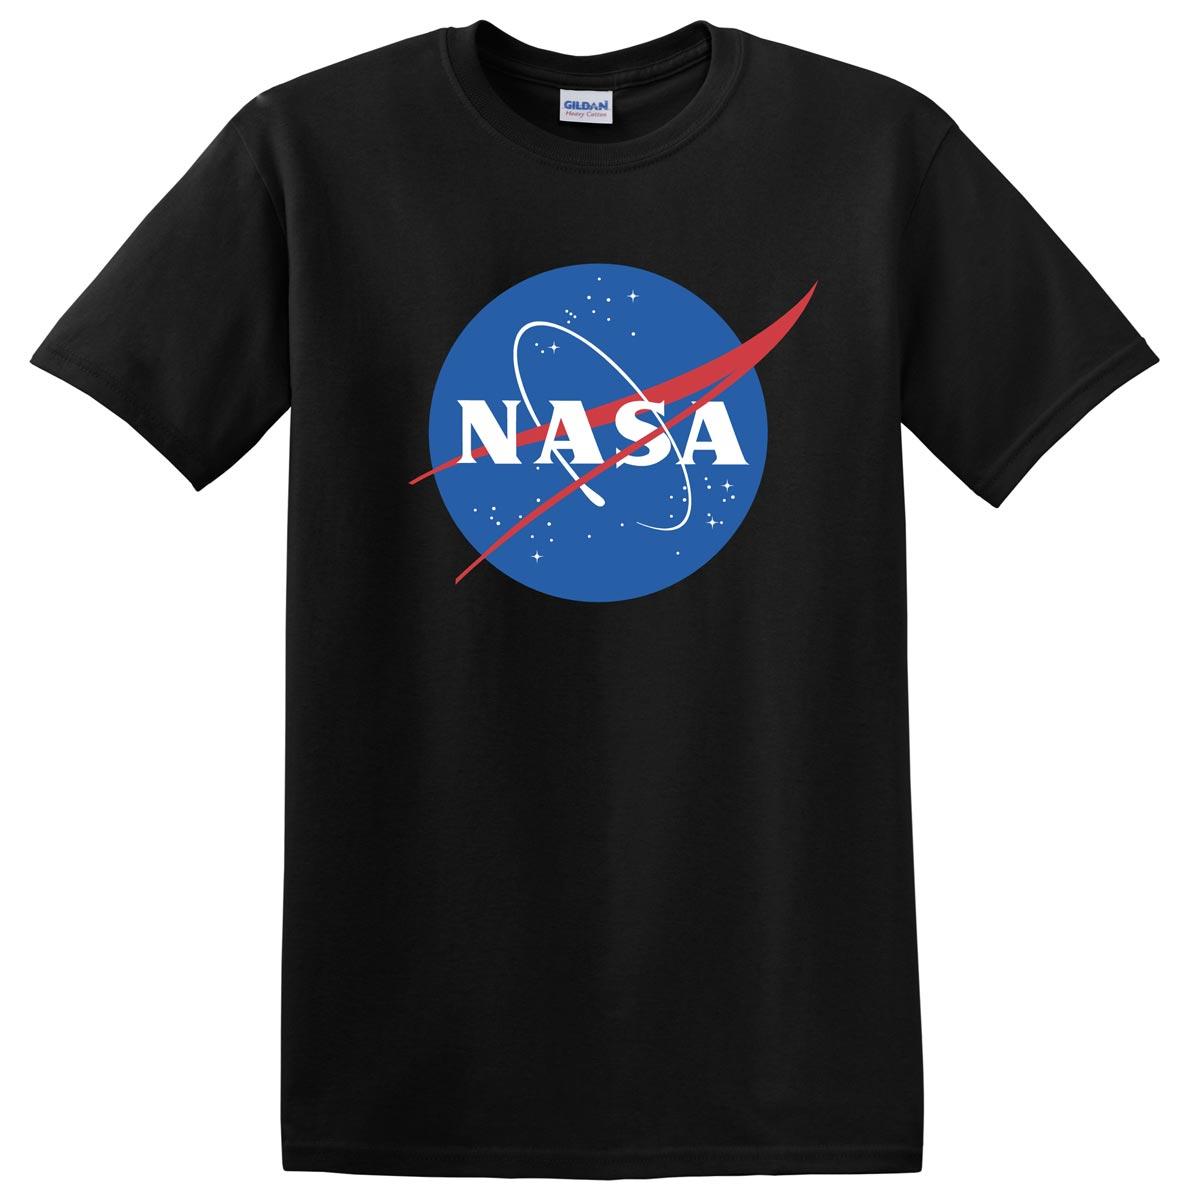 NASA Black Logo - NASA Shirt Meatball Science Space T-shirt Tee Black Men Women Adult